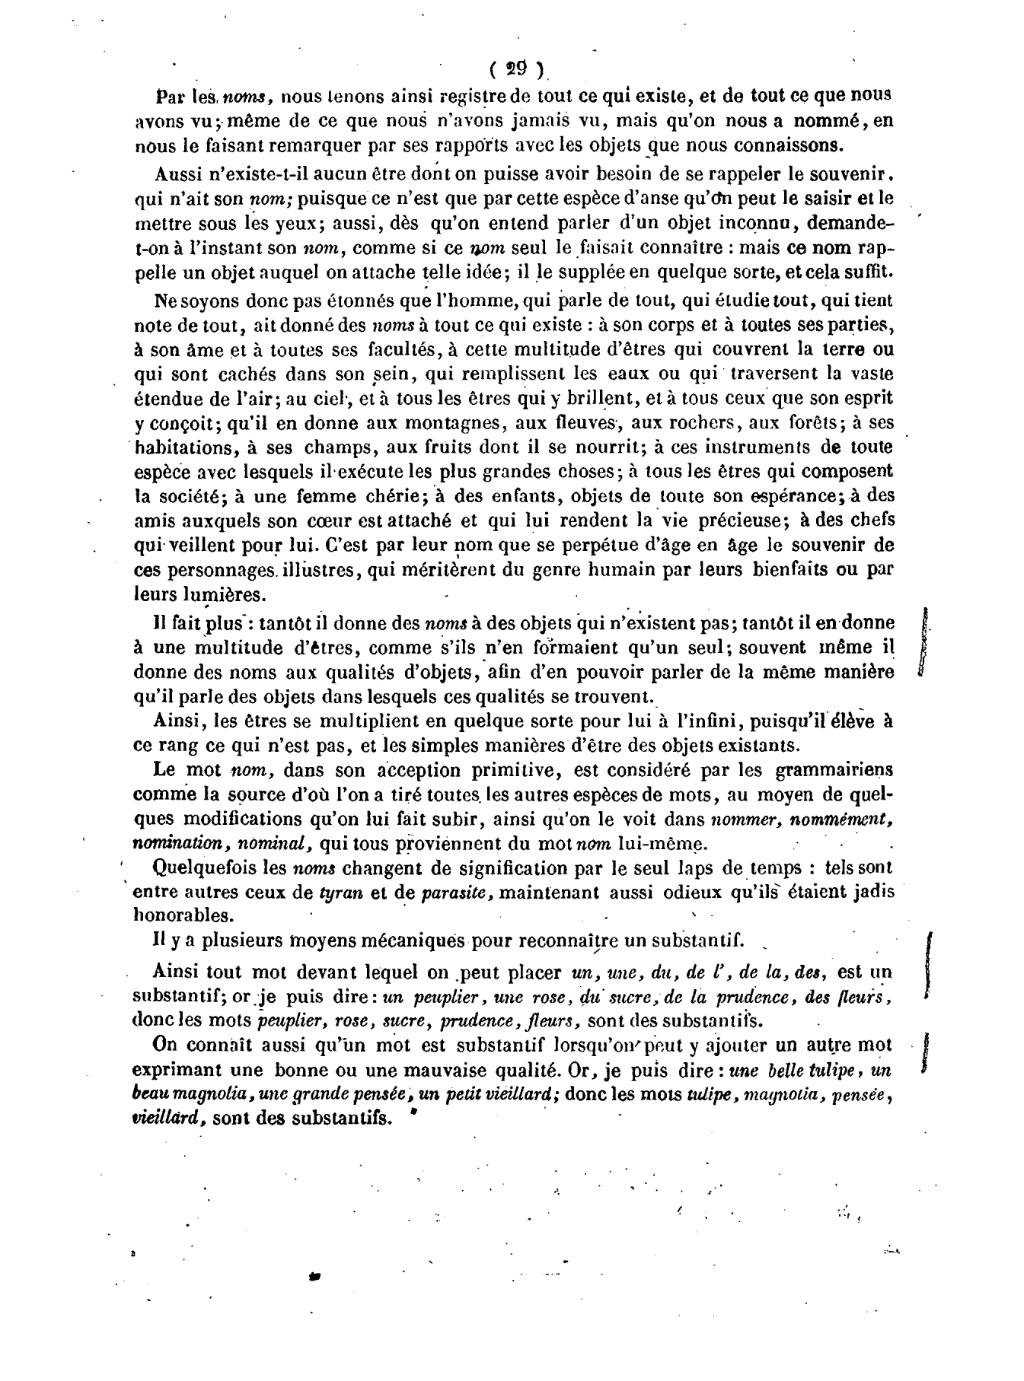 https://upload.wikimedia.org/wikipedia/commons/thumb/e/e9/Bescherelle_-_Grammaire_nationale.djvu/page33-1024px-Bescherelle_-_Grammaire_nationale.djvu.jpg